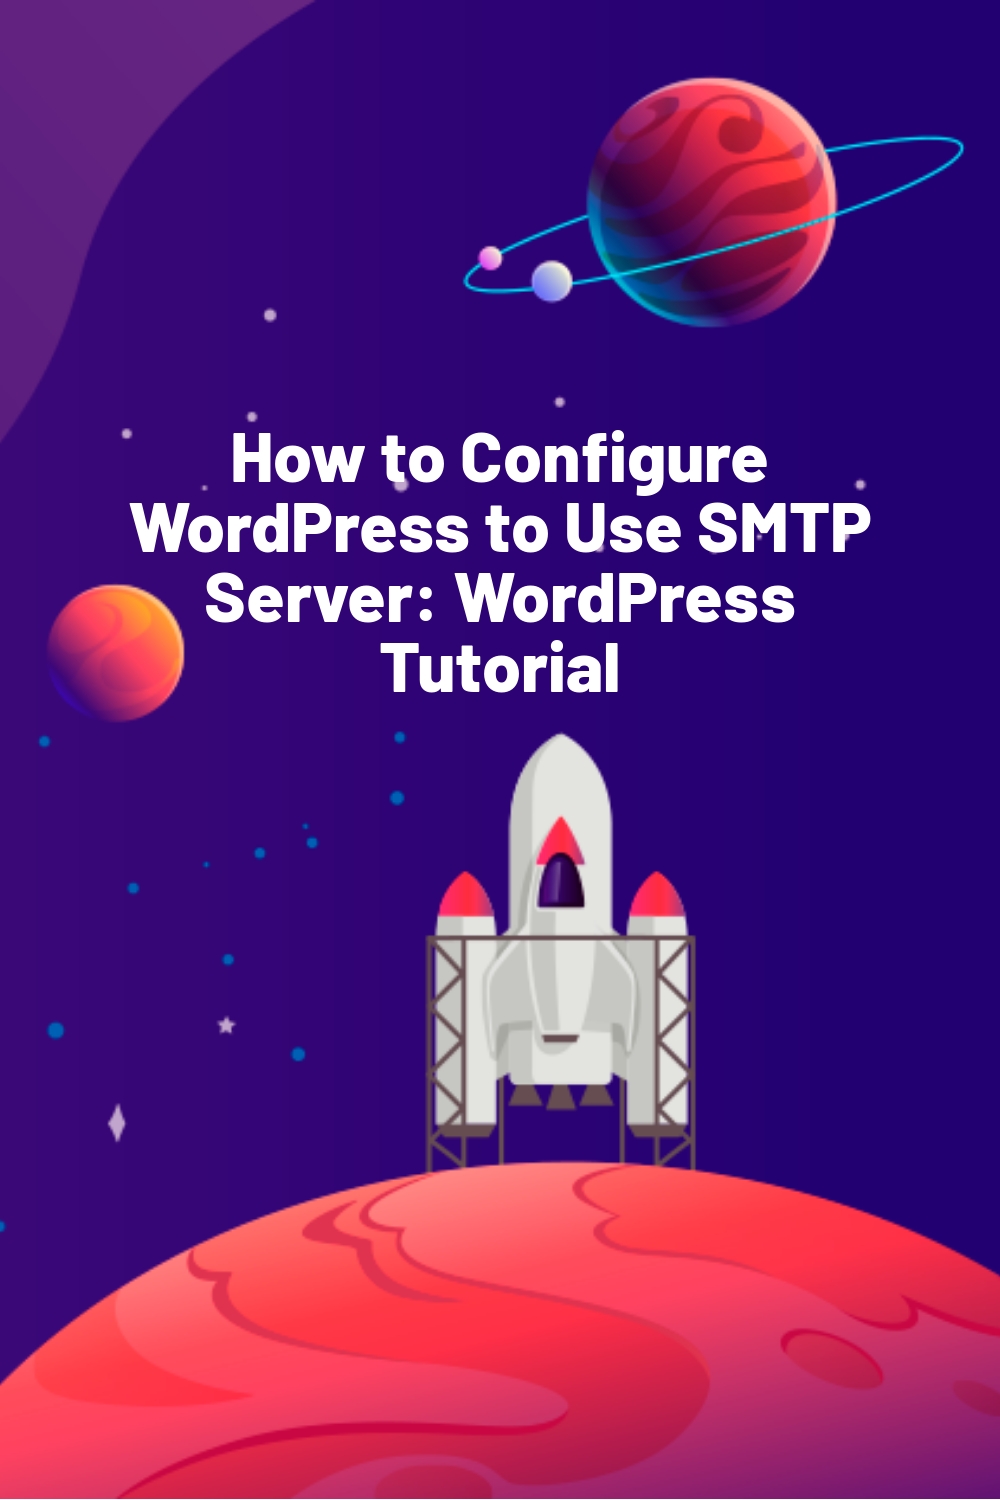 How to Configure WordPress to Use SMTP Server: WordPress Tutorial